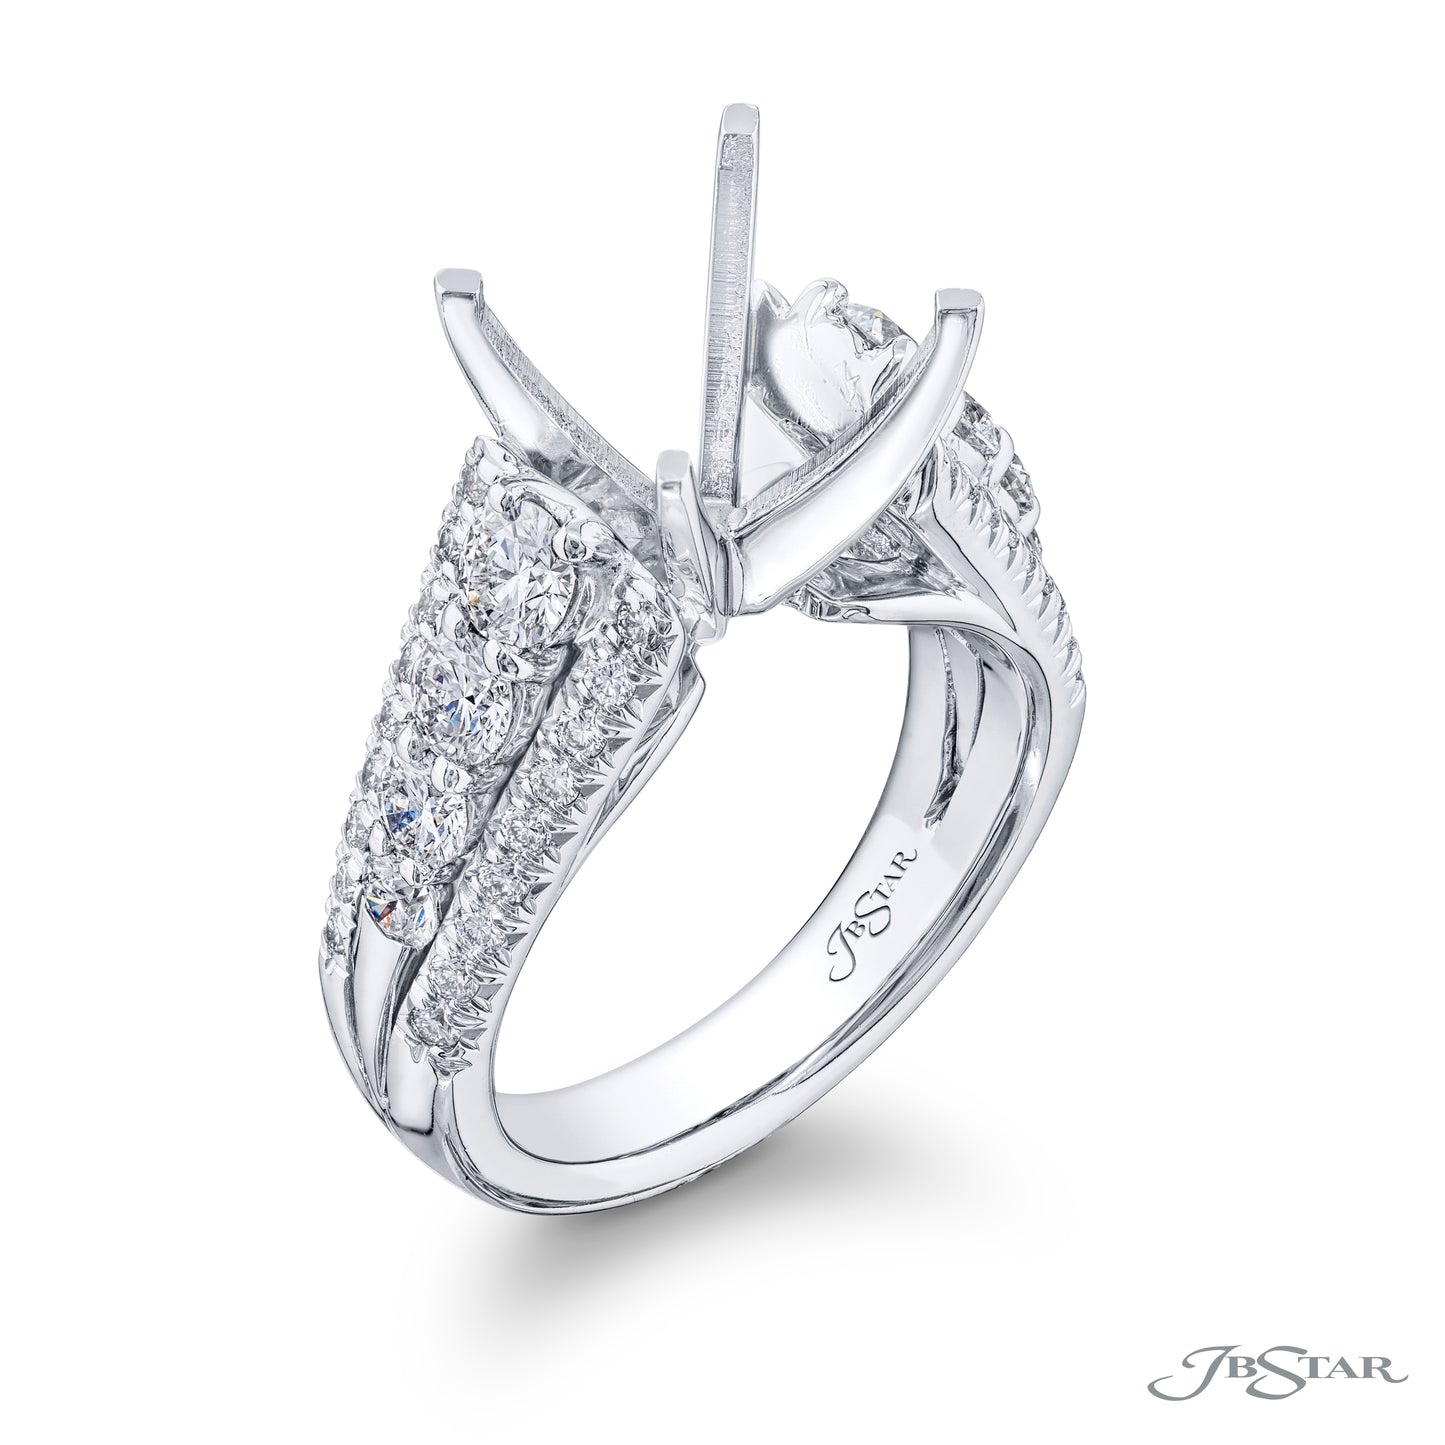 JB Star Platinum Wide Diamond Semi-Mount Shared Prong and Pavé Engagement Ring - Diamond Semi-Mount Rings